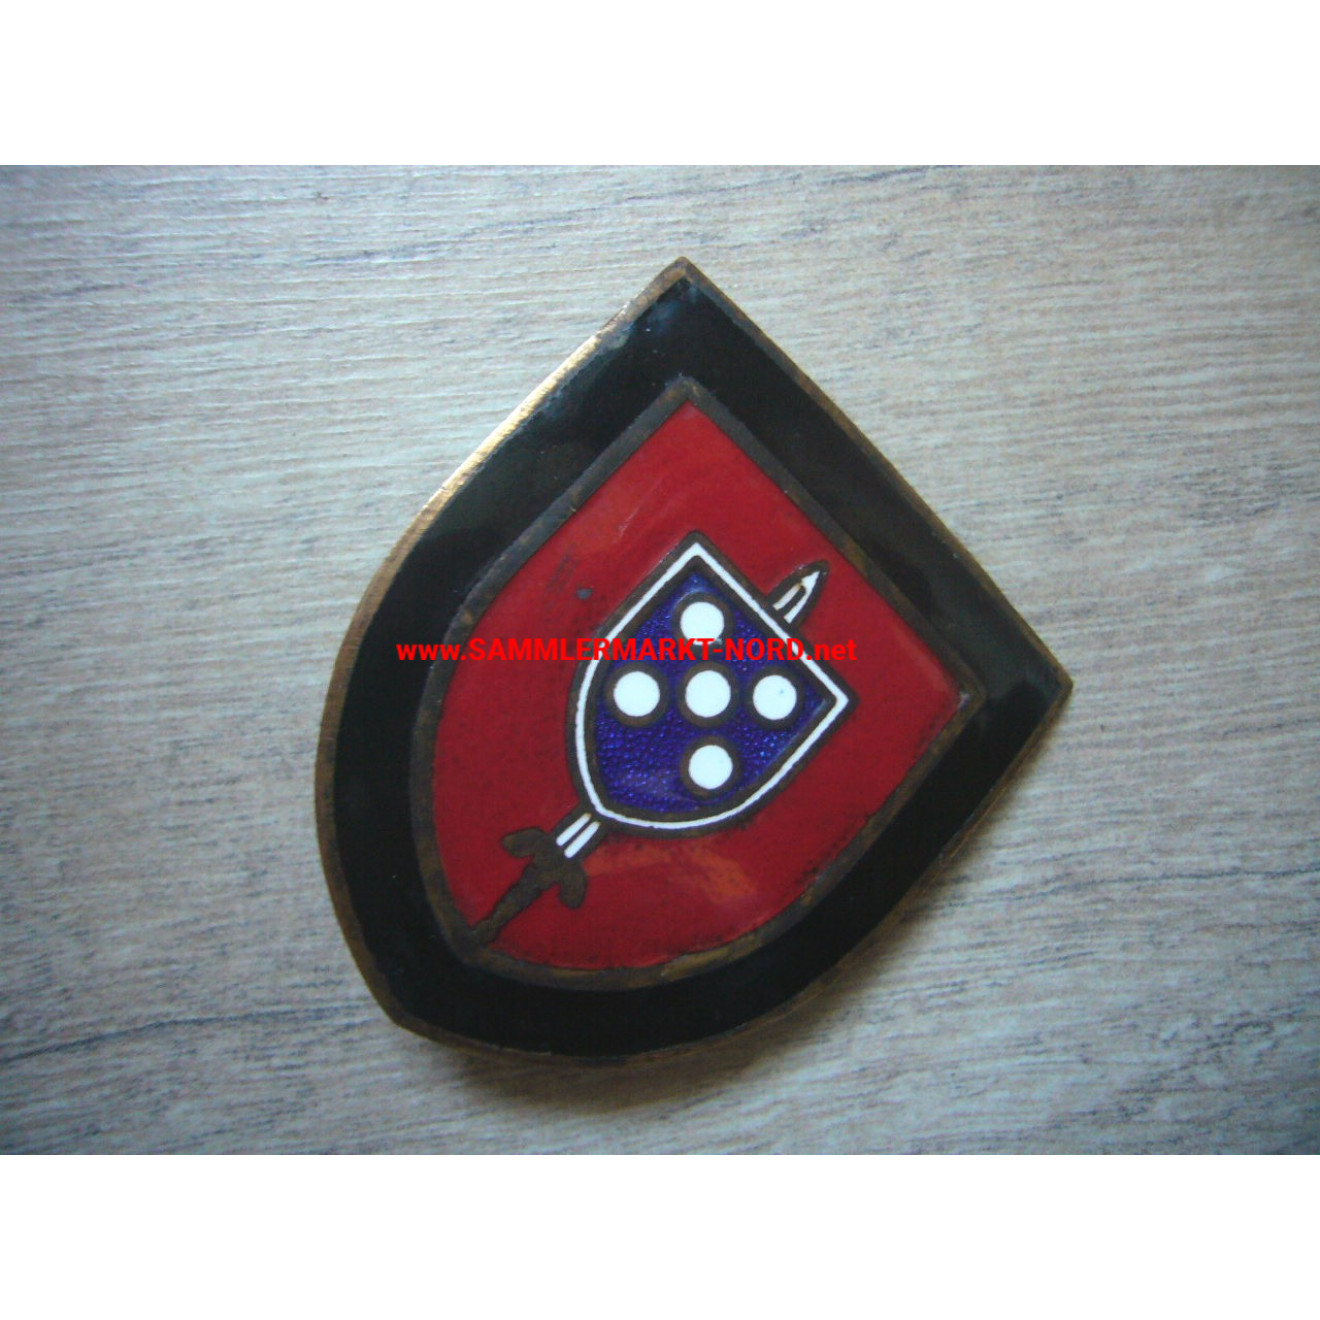 Unknown division insignia / troop insignia